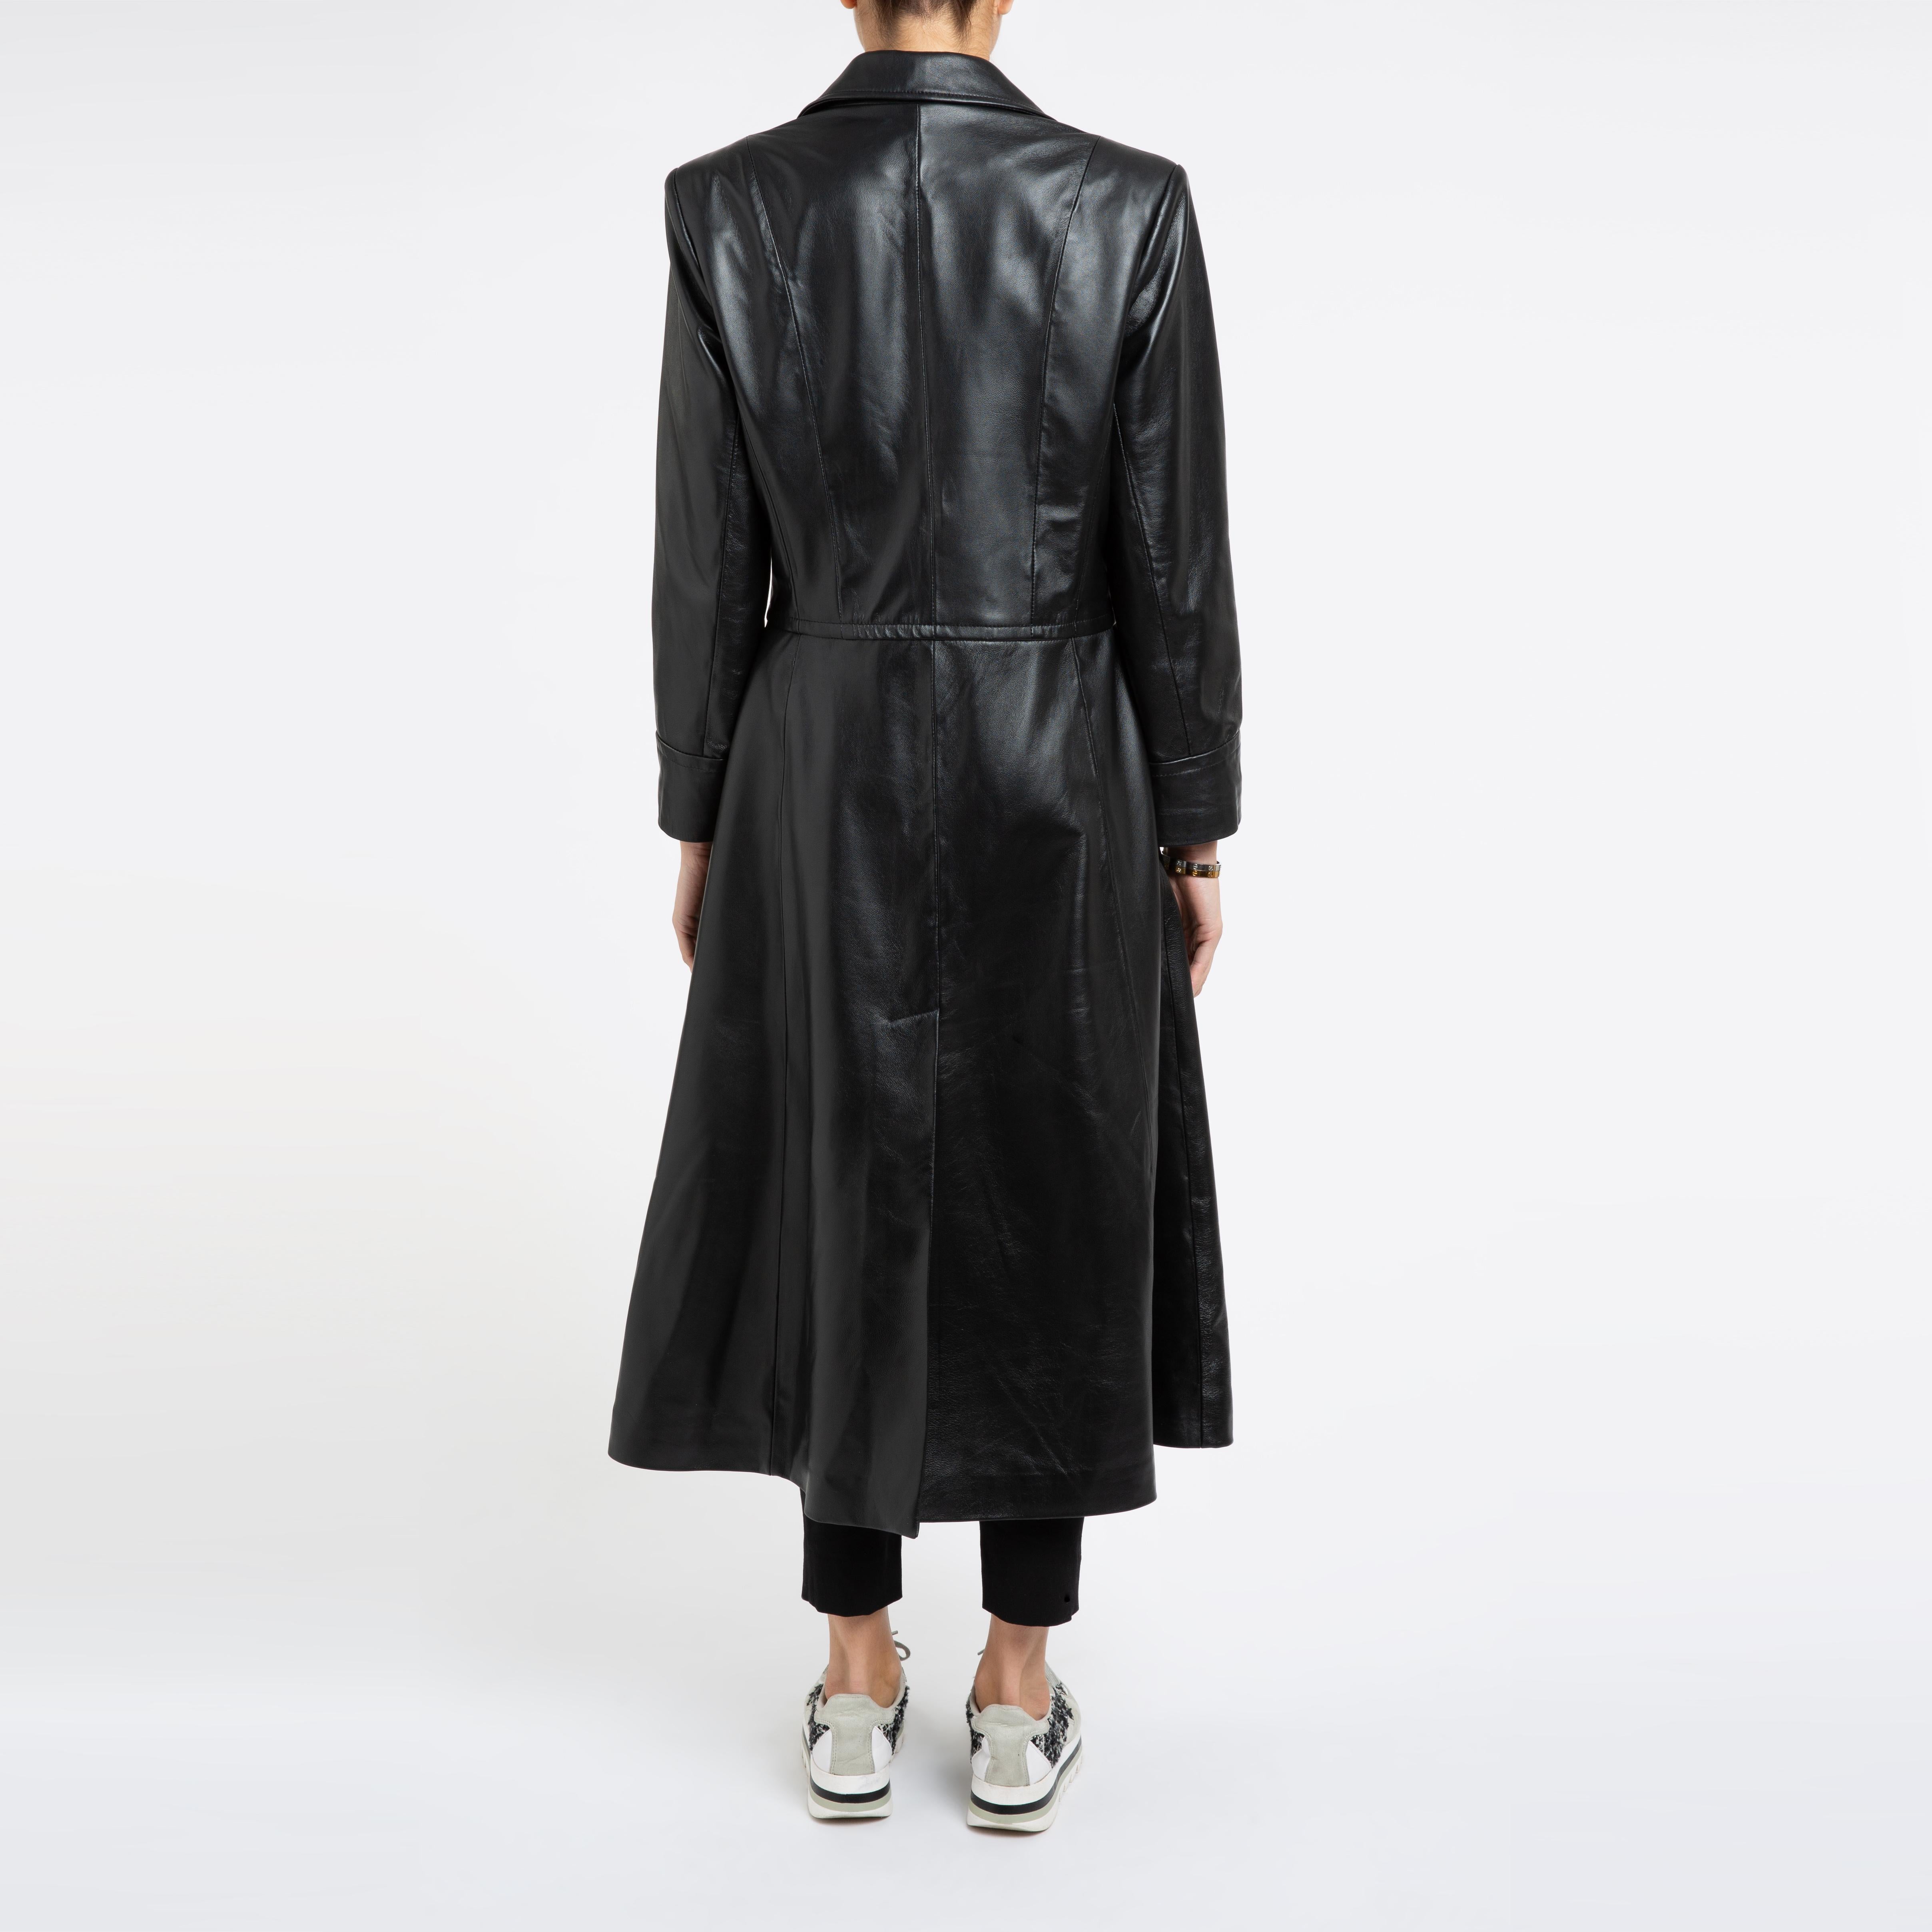 Verheyen London Oversize 70's Leather Trench Coat in Black - Size uk 6 For Sale 3